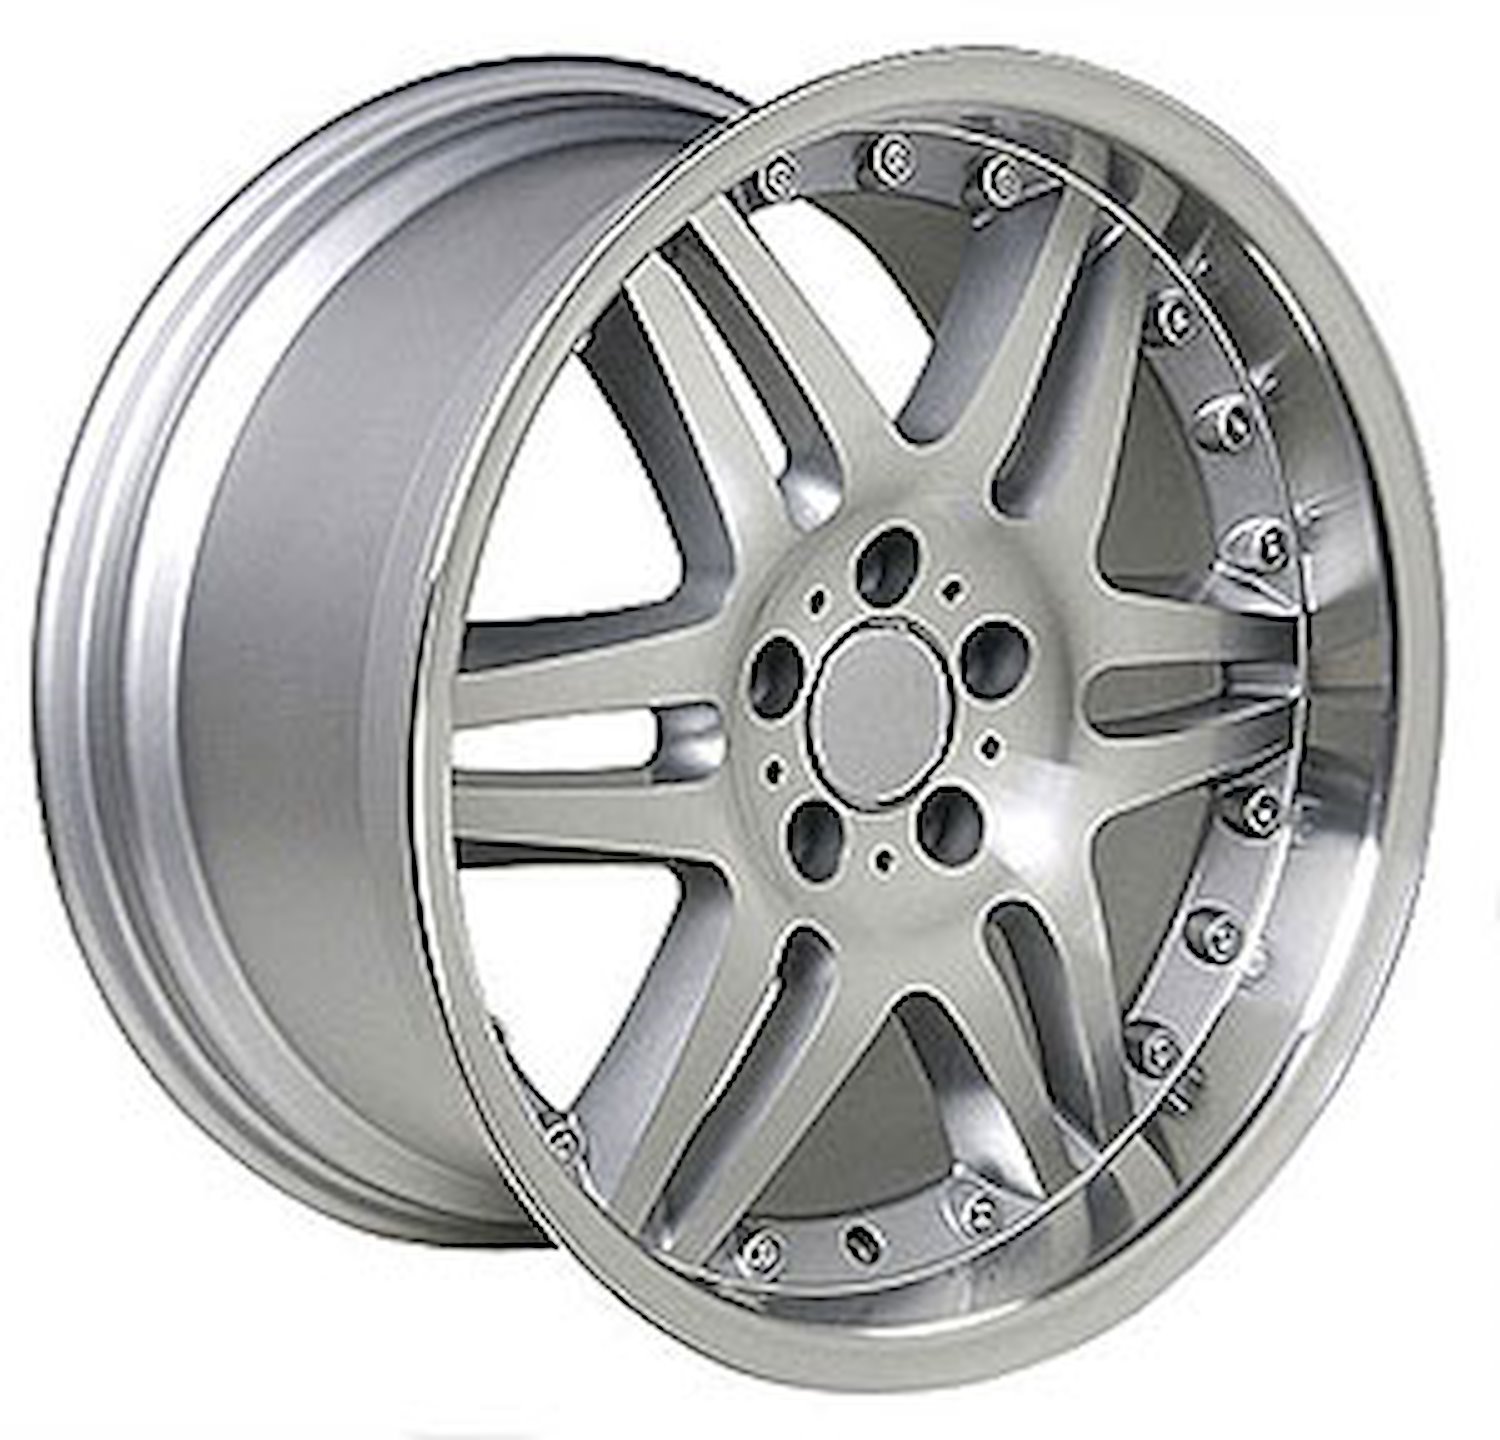 Mercedes-Benz Monoblock Split-Spoke Wheel Size: 18" x 8.5" Bolt Pattern: 5 x 112 Rear Spacing: 6.13" Offset: +35mm